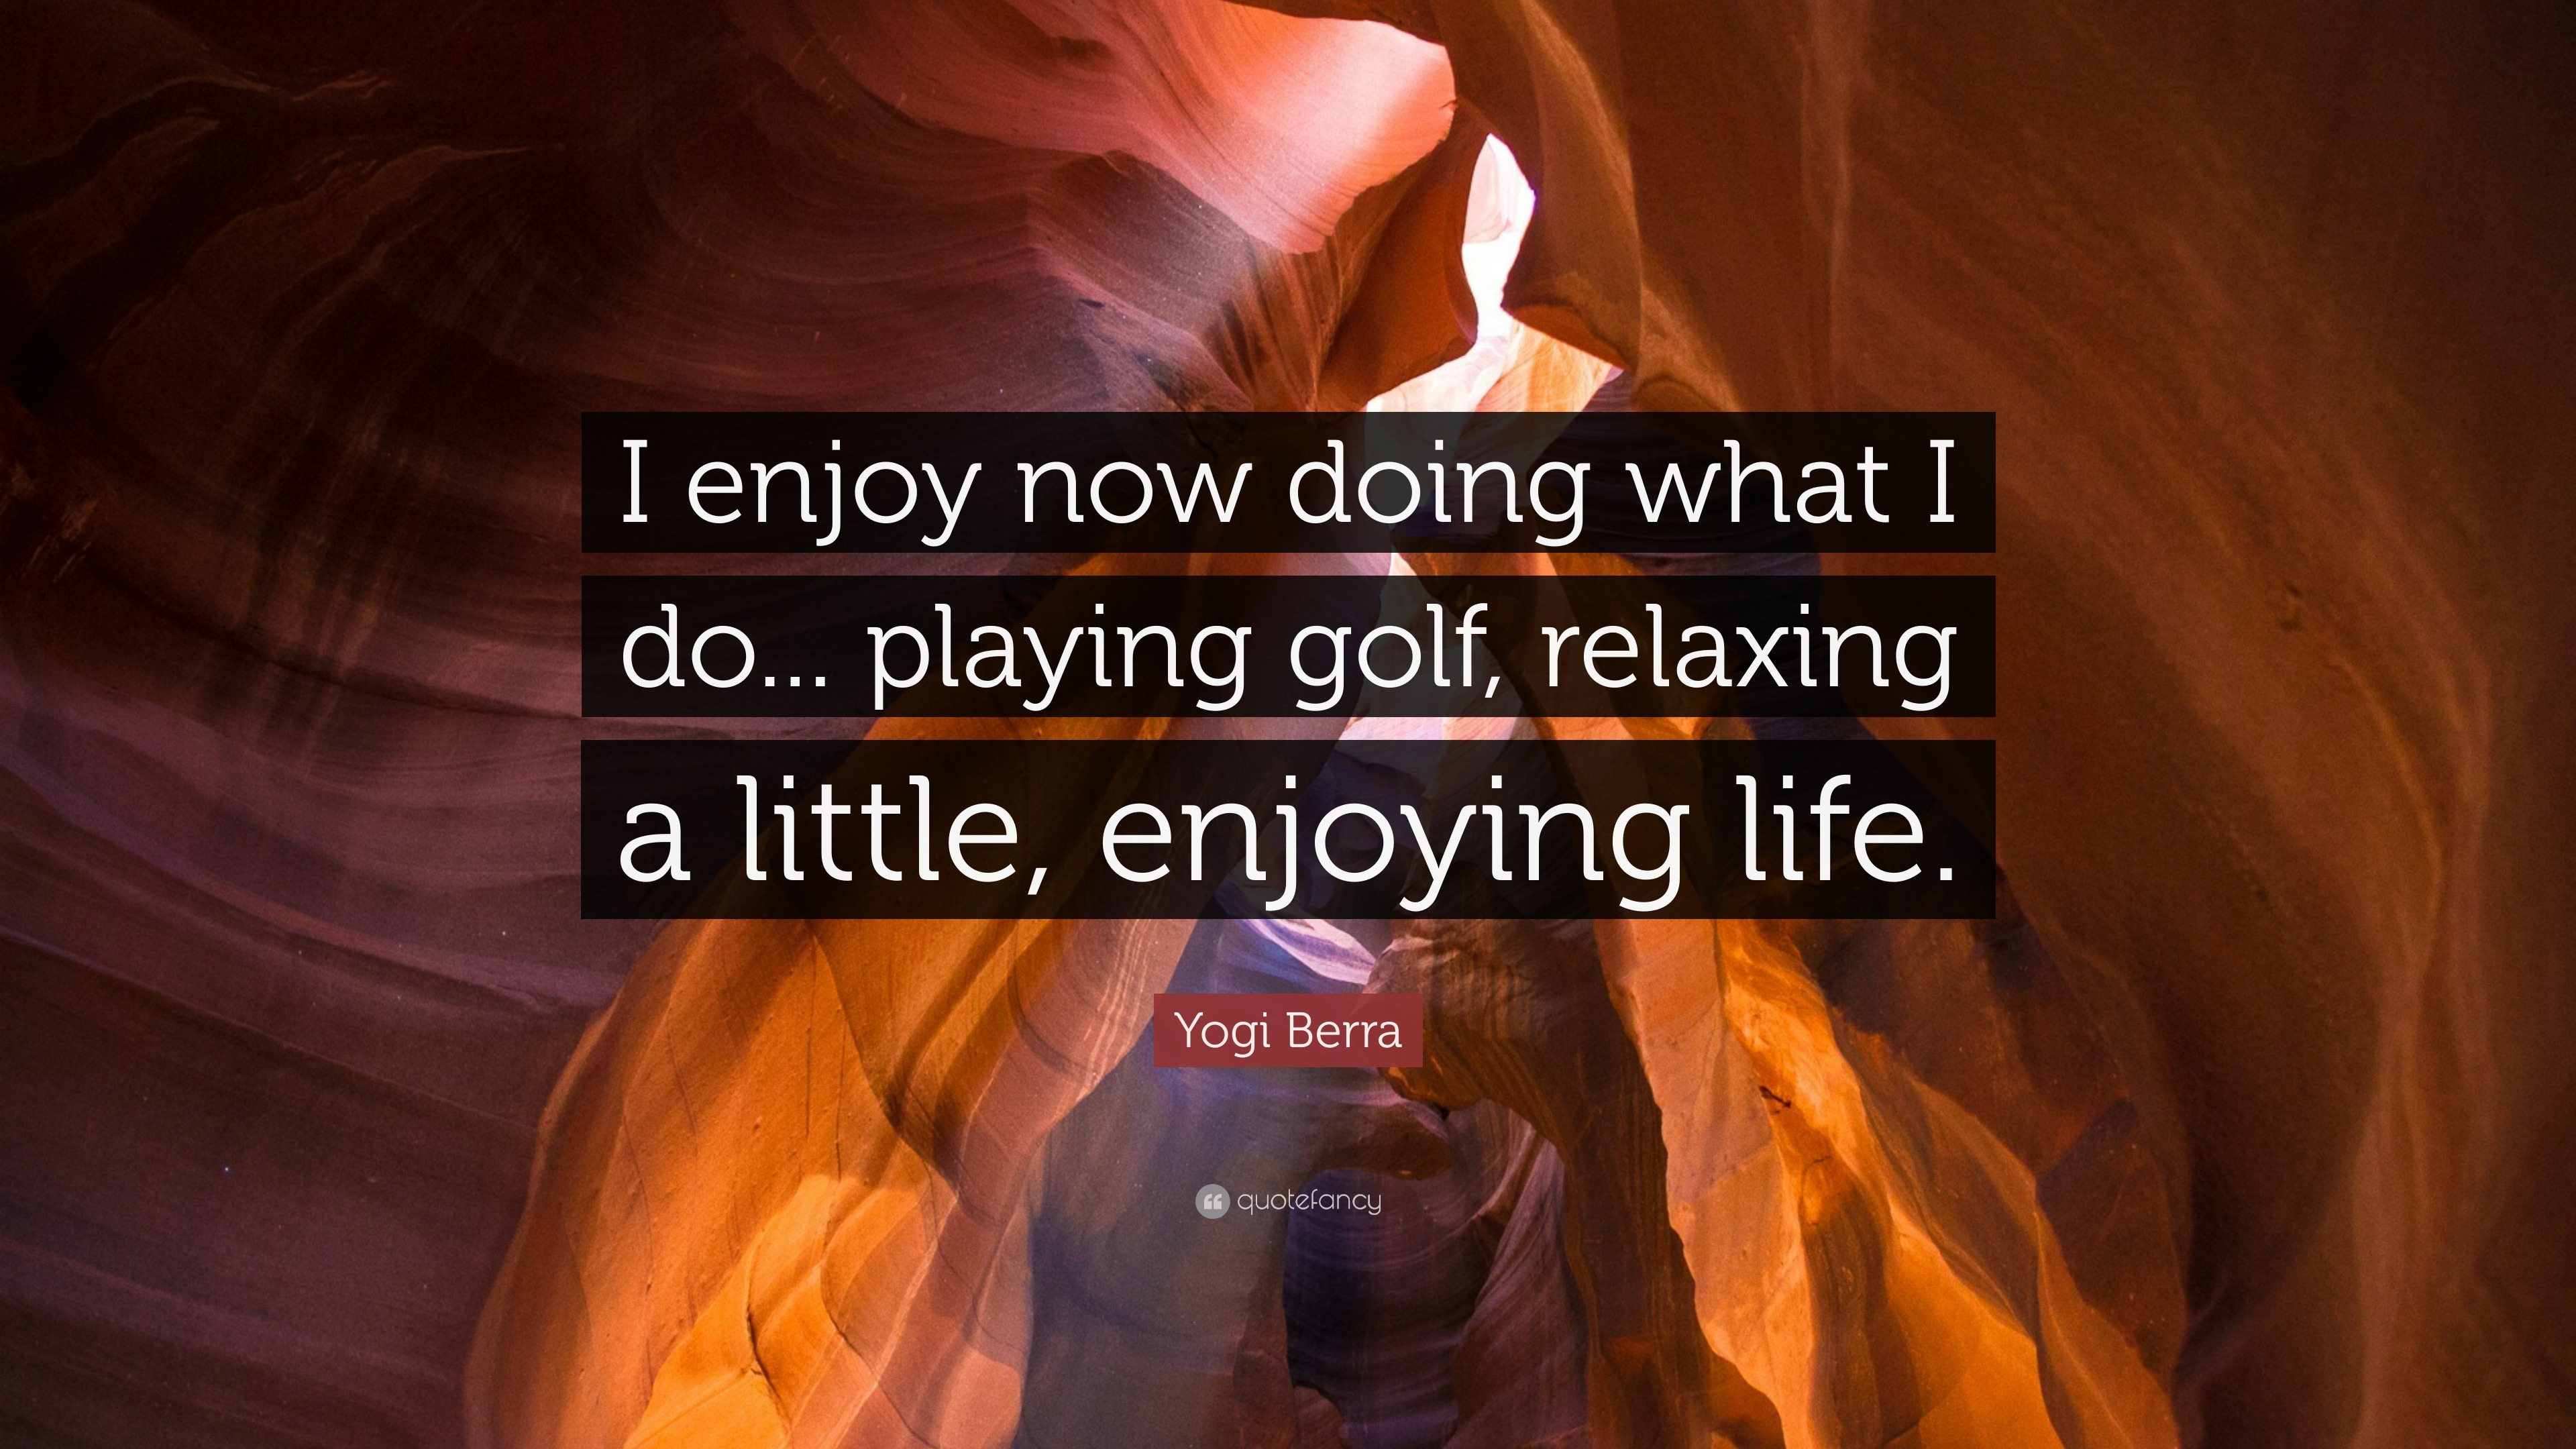 Yogi Berra Quote “I enjoy now doing what I do playing